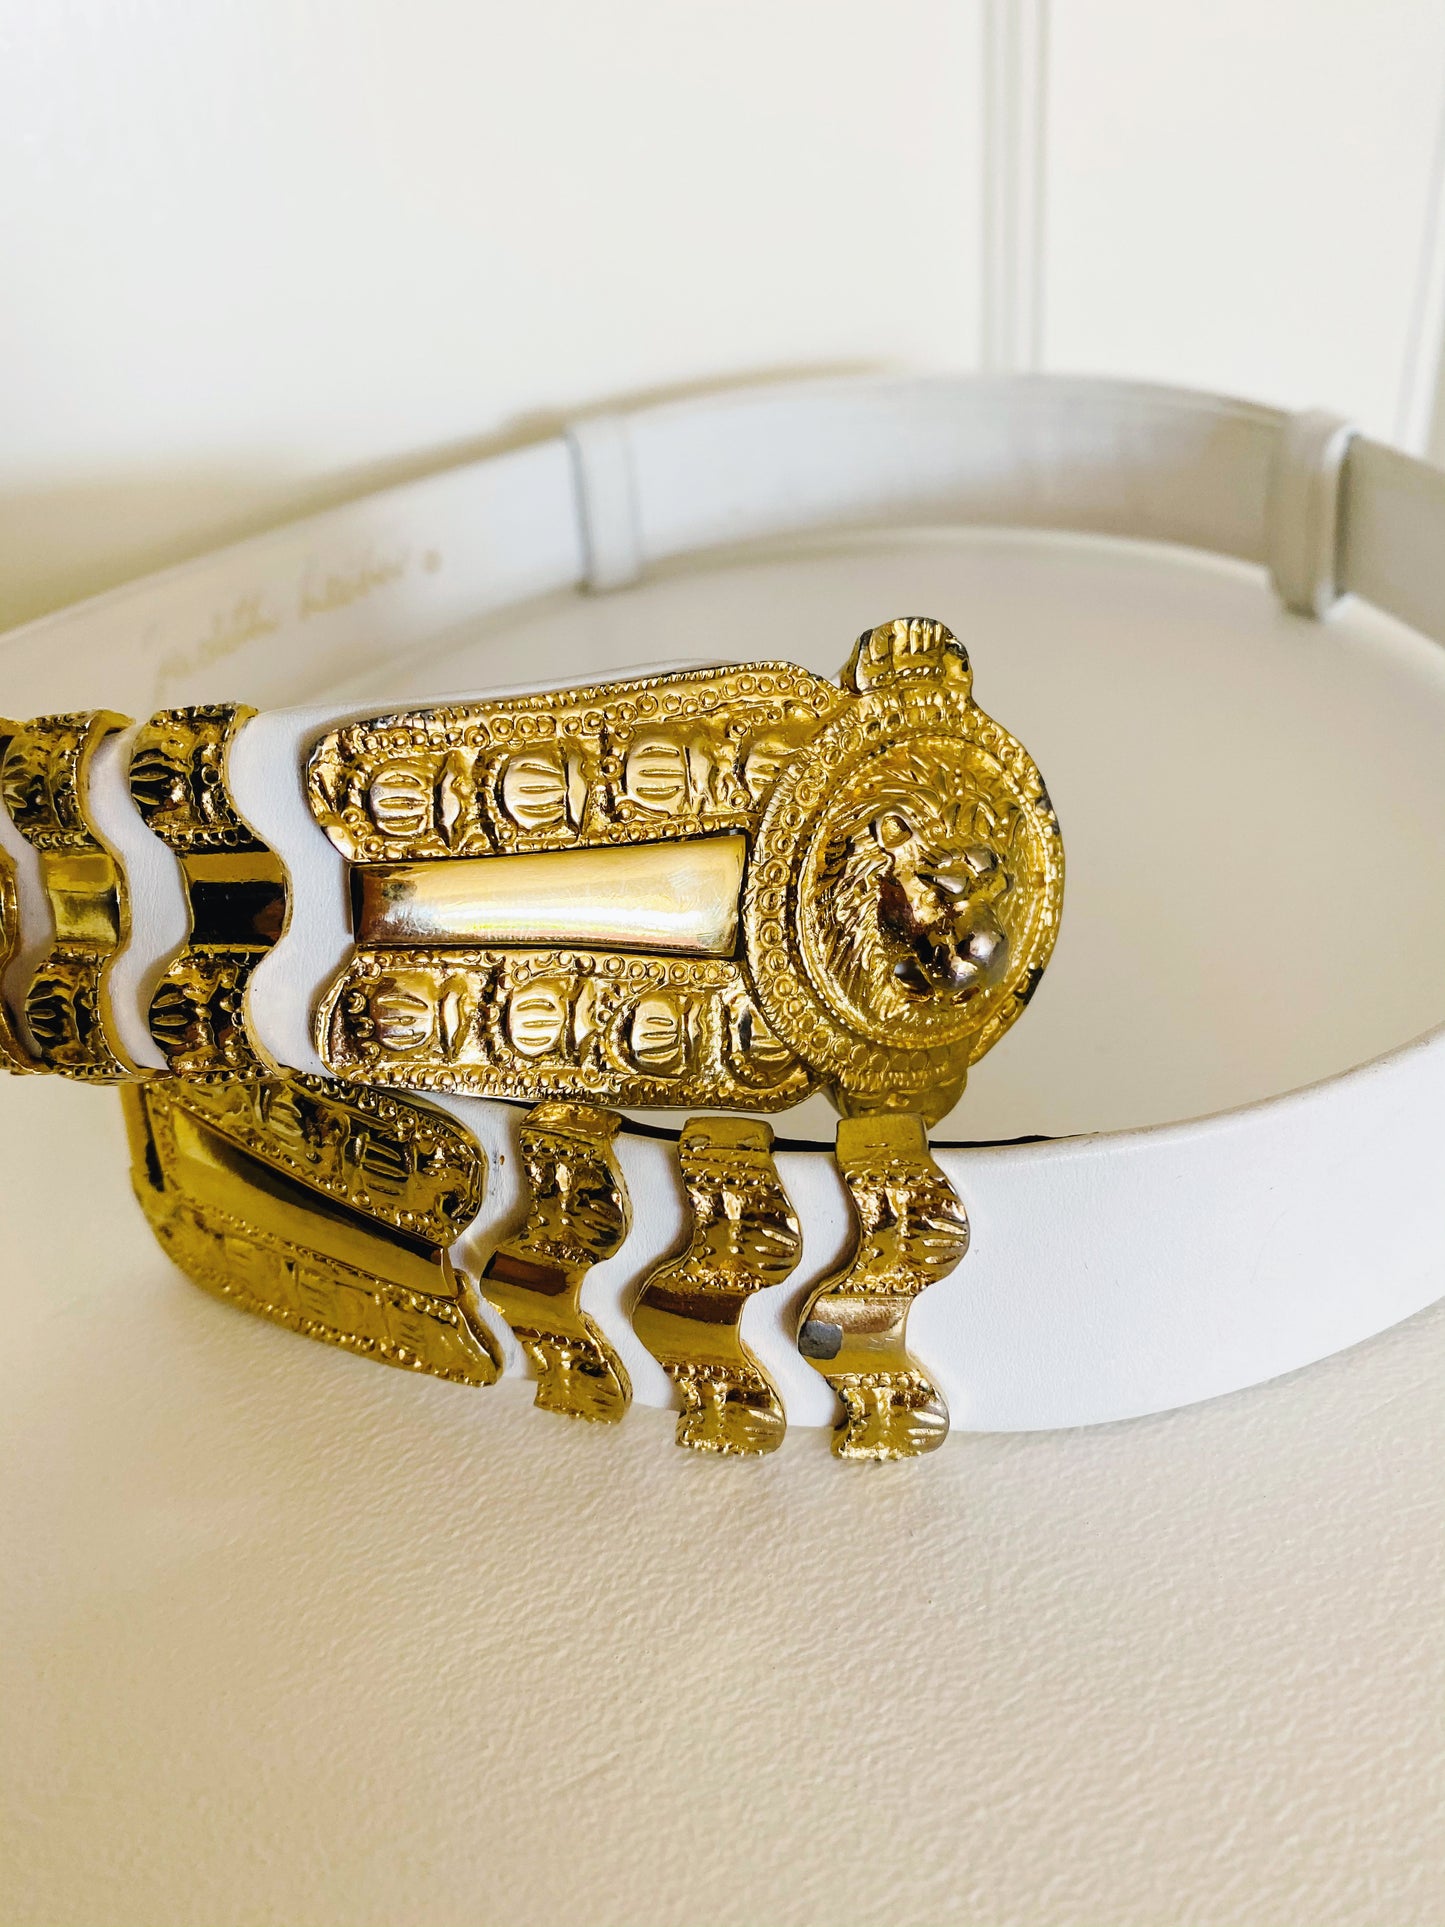 Judith Leiber White Leather Gold Lion Belt